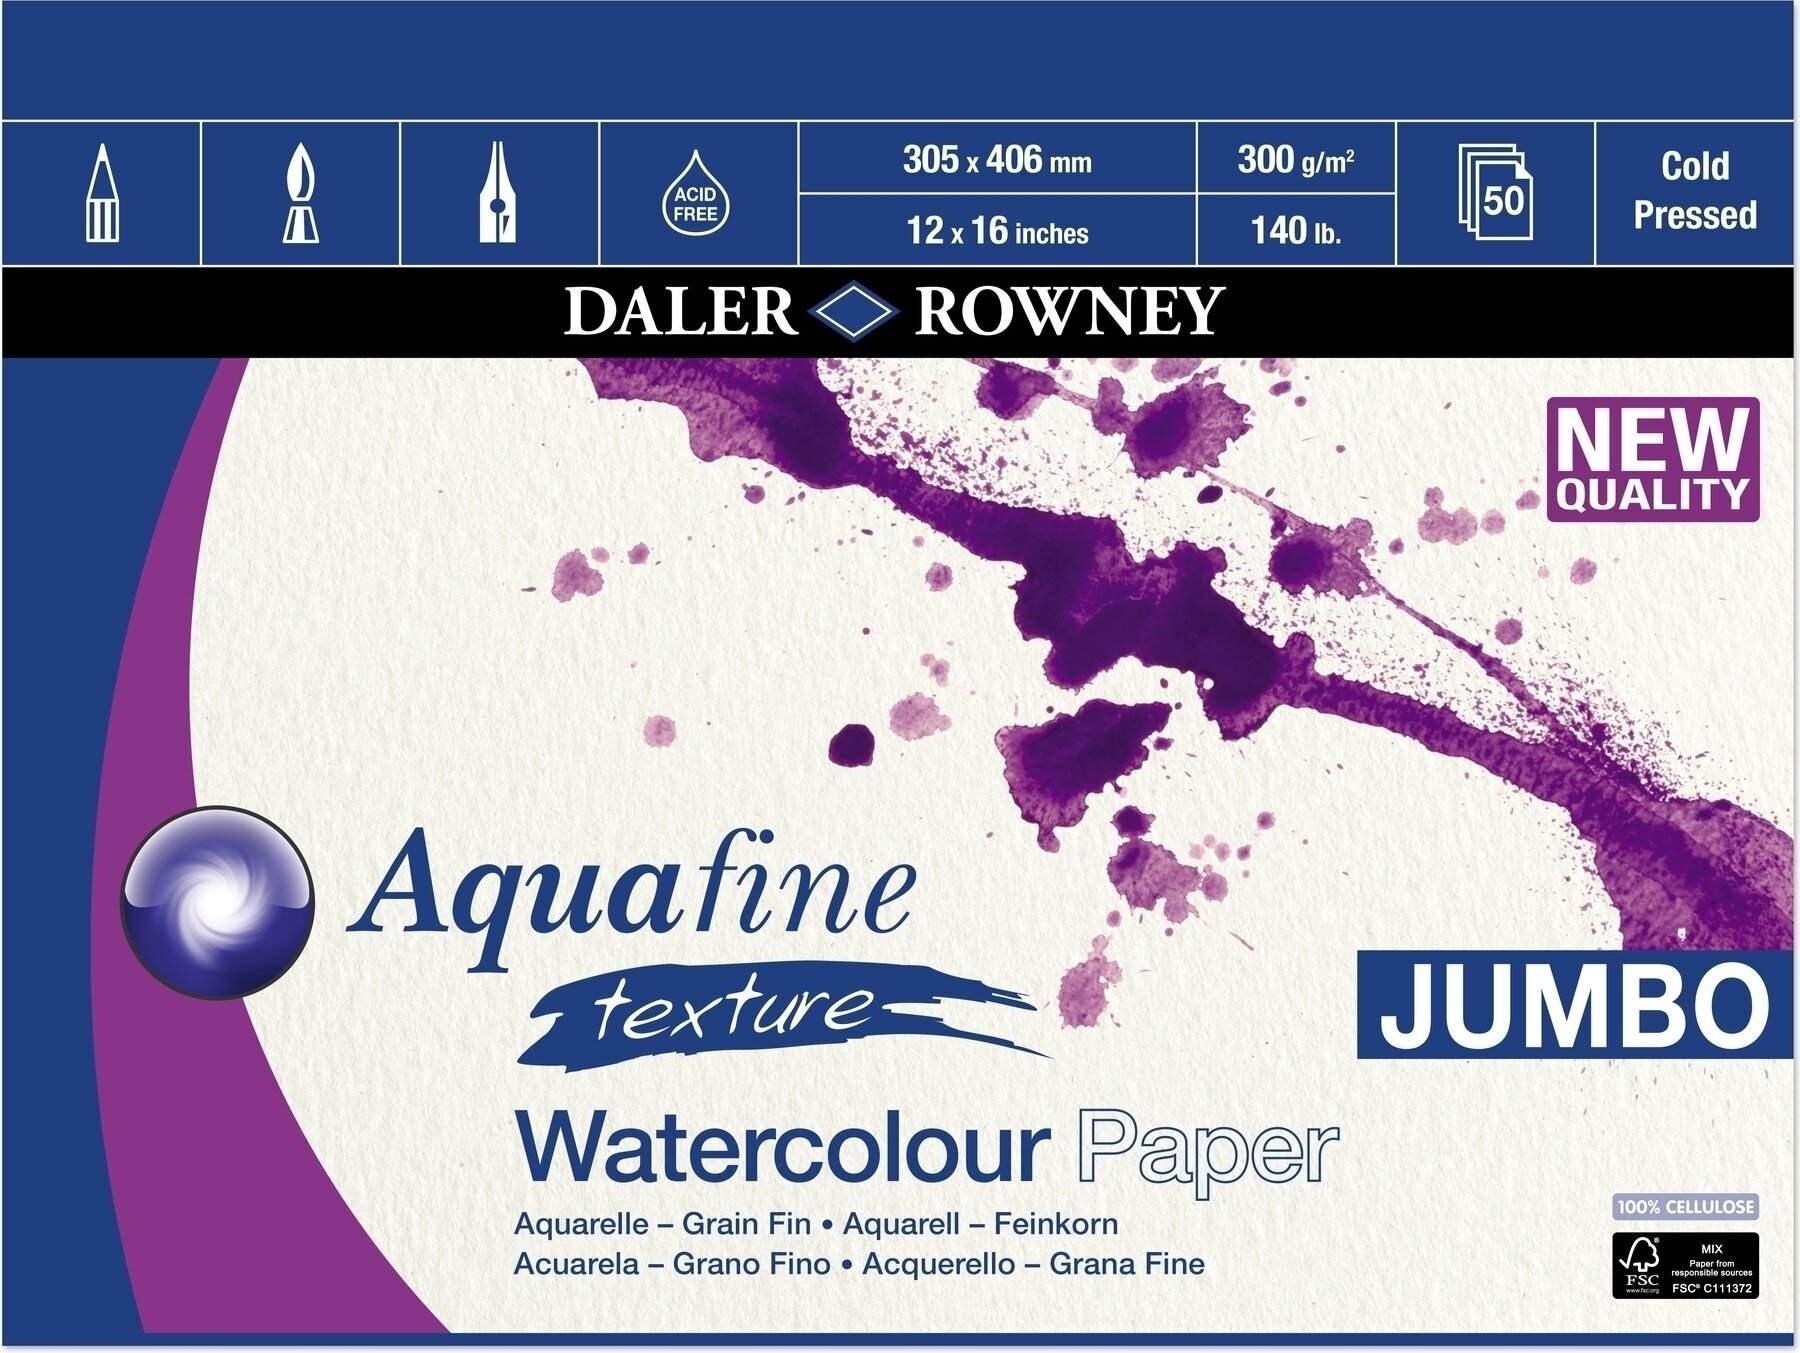 Luonnosvihko Daler Rowney Aquafine Texture Watercolour Paper Aquafine 30,5 x 40,6 cm 300 g Luonnosvihko